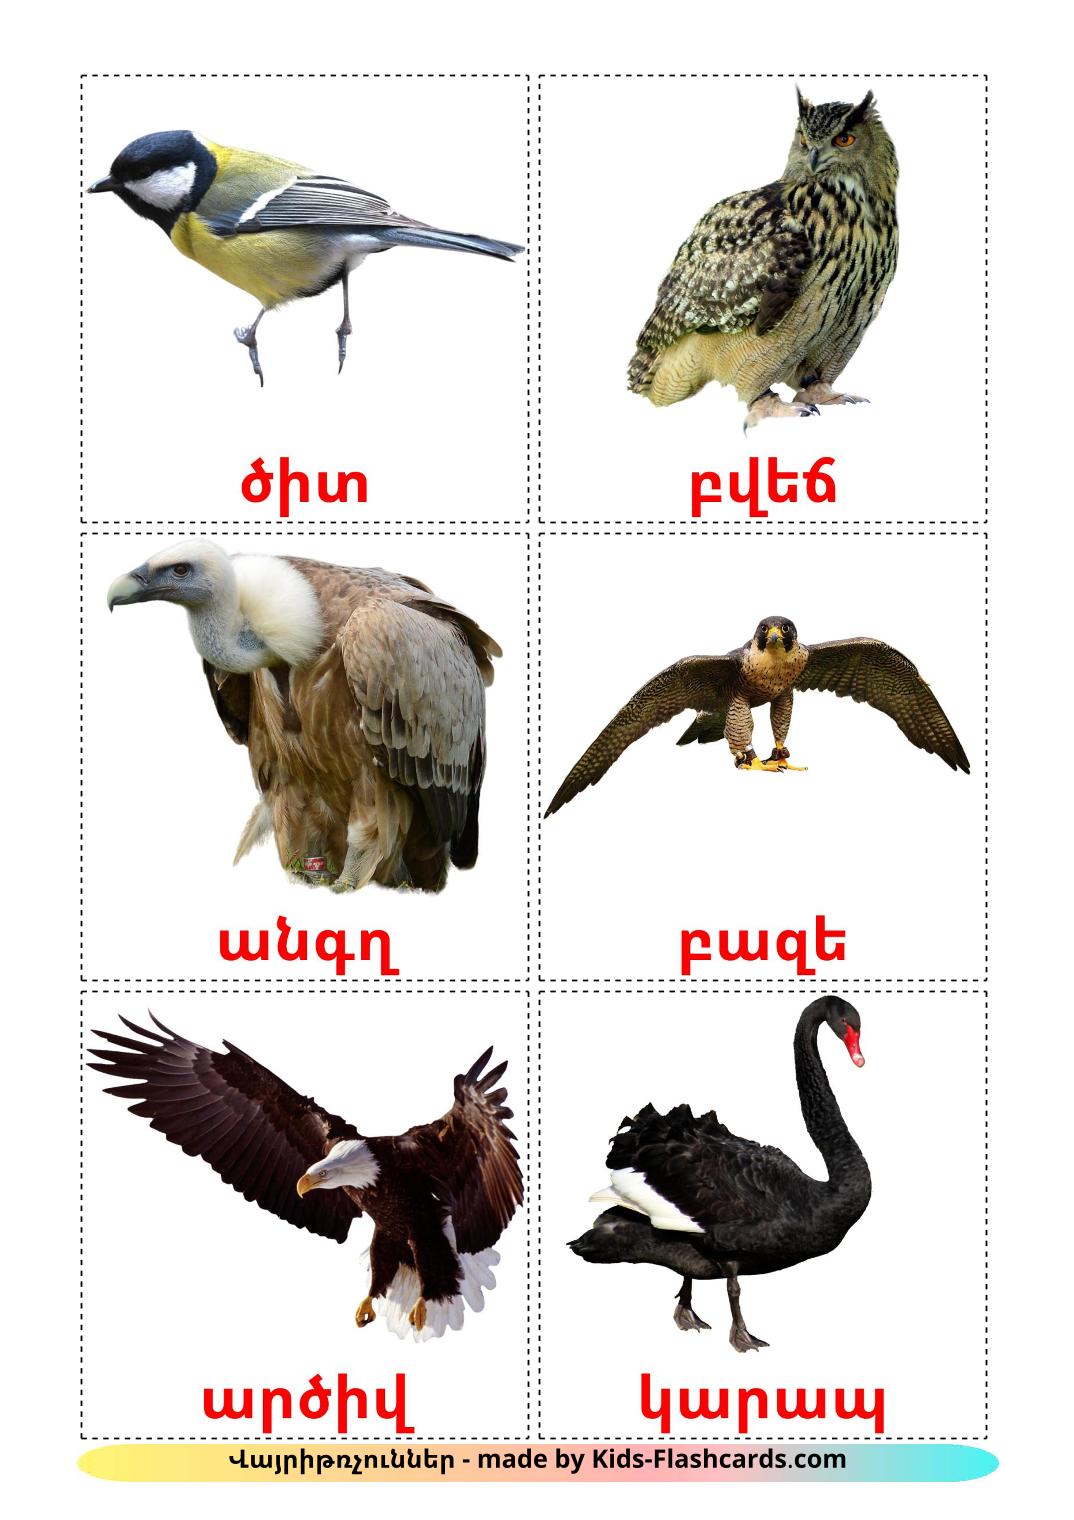 Pájaros salvajes - 18 fichas de armenio para imprimir gratis 